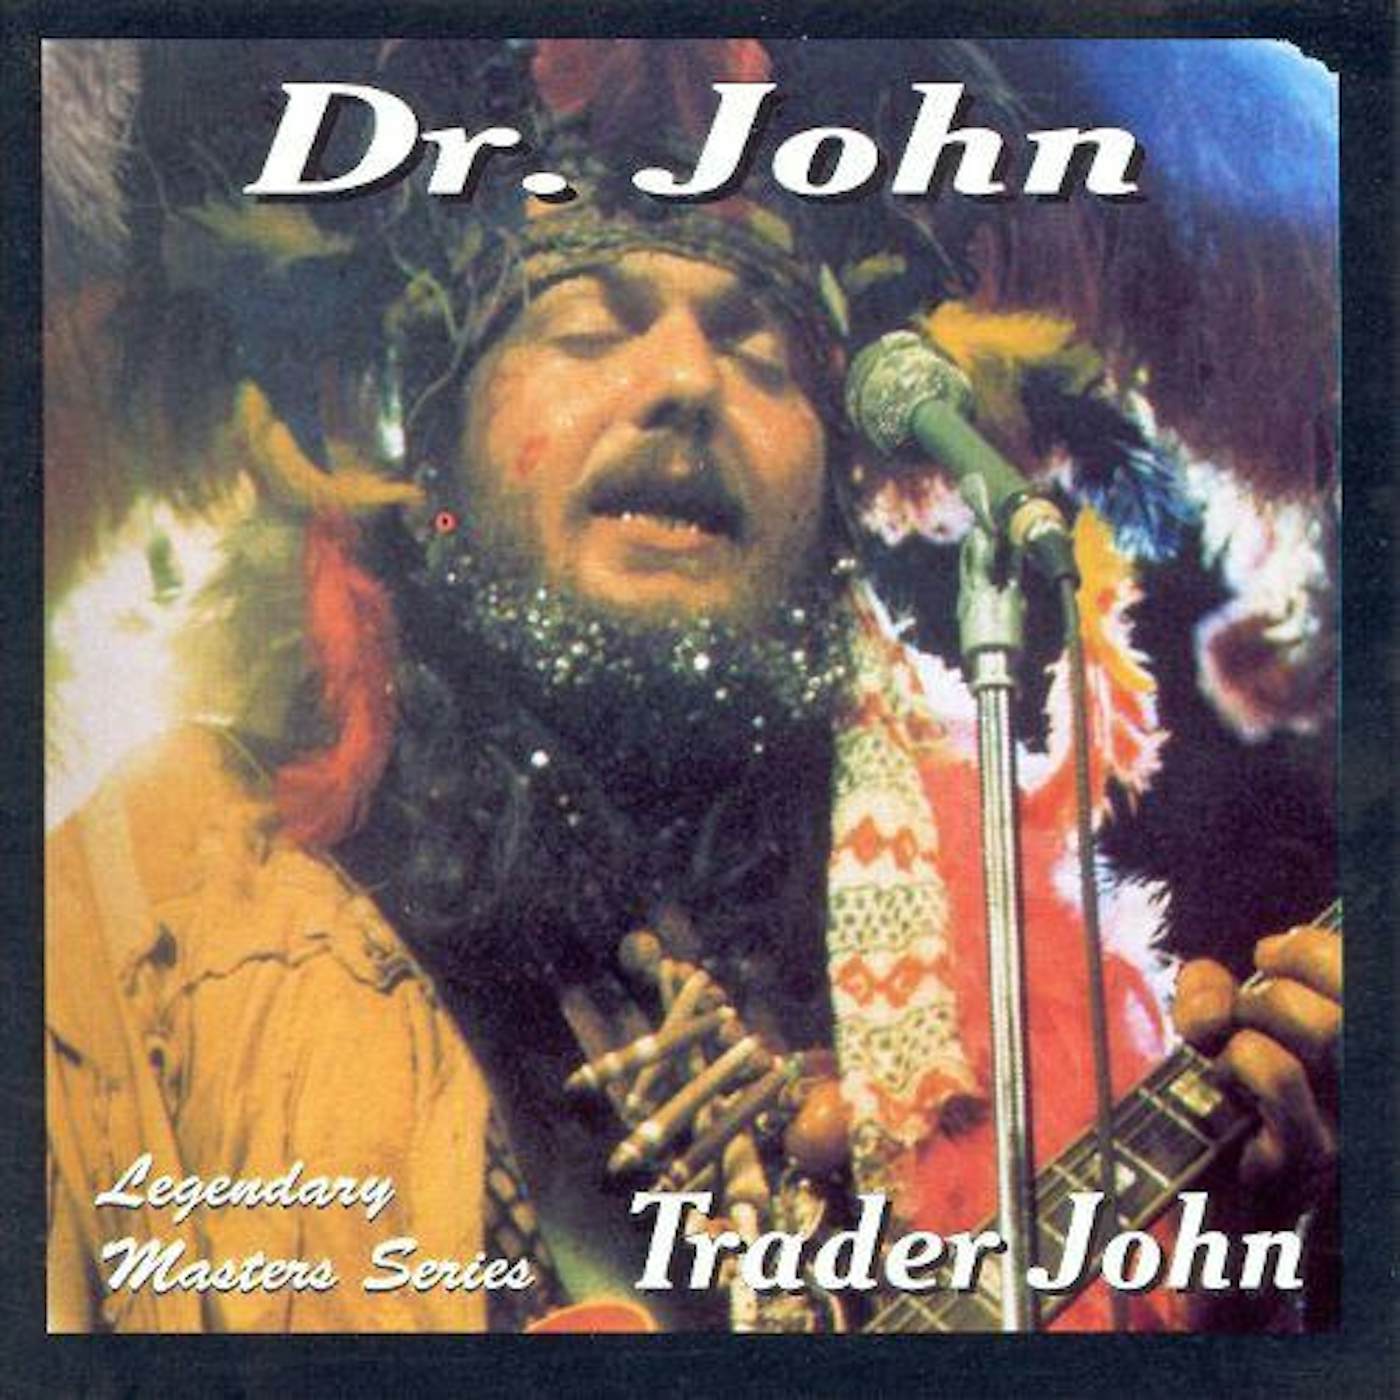 Dr. John TRADER JOHN CD